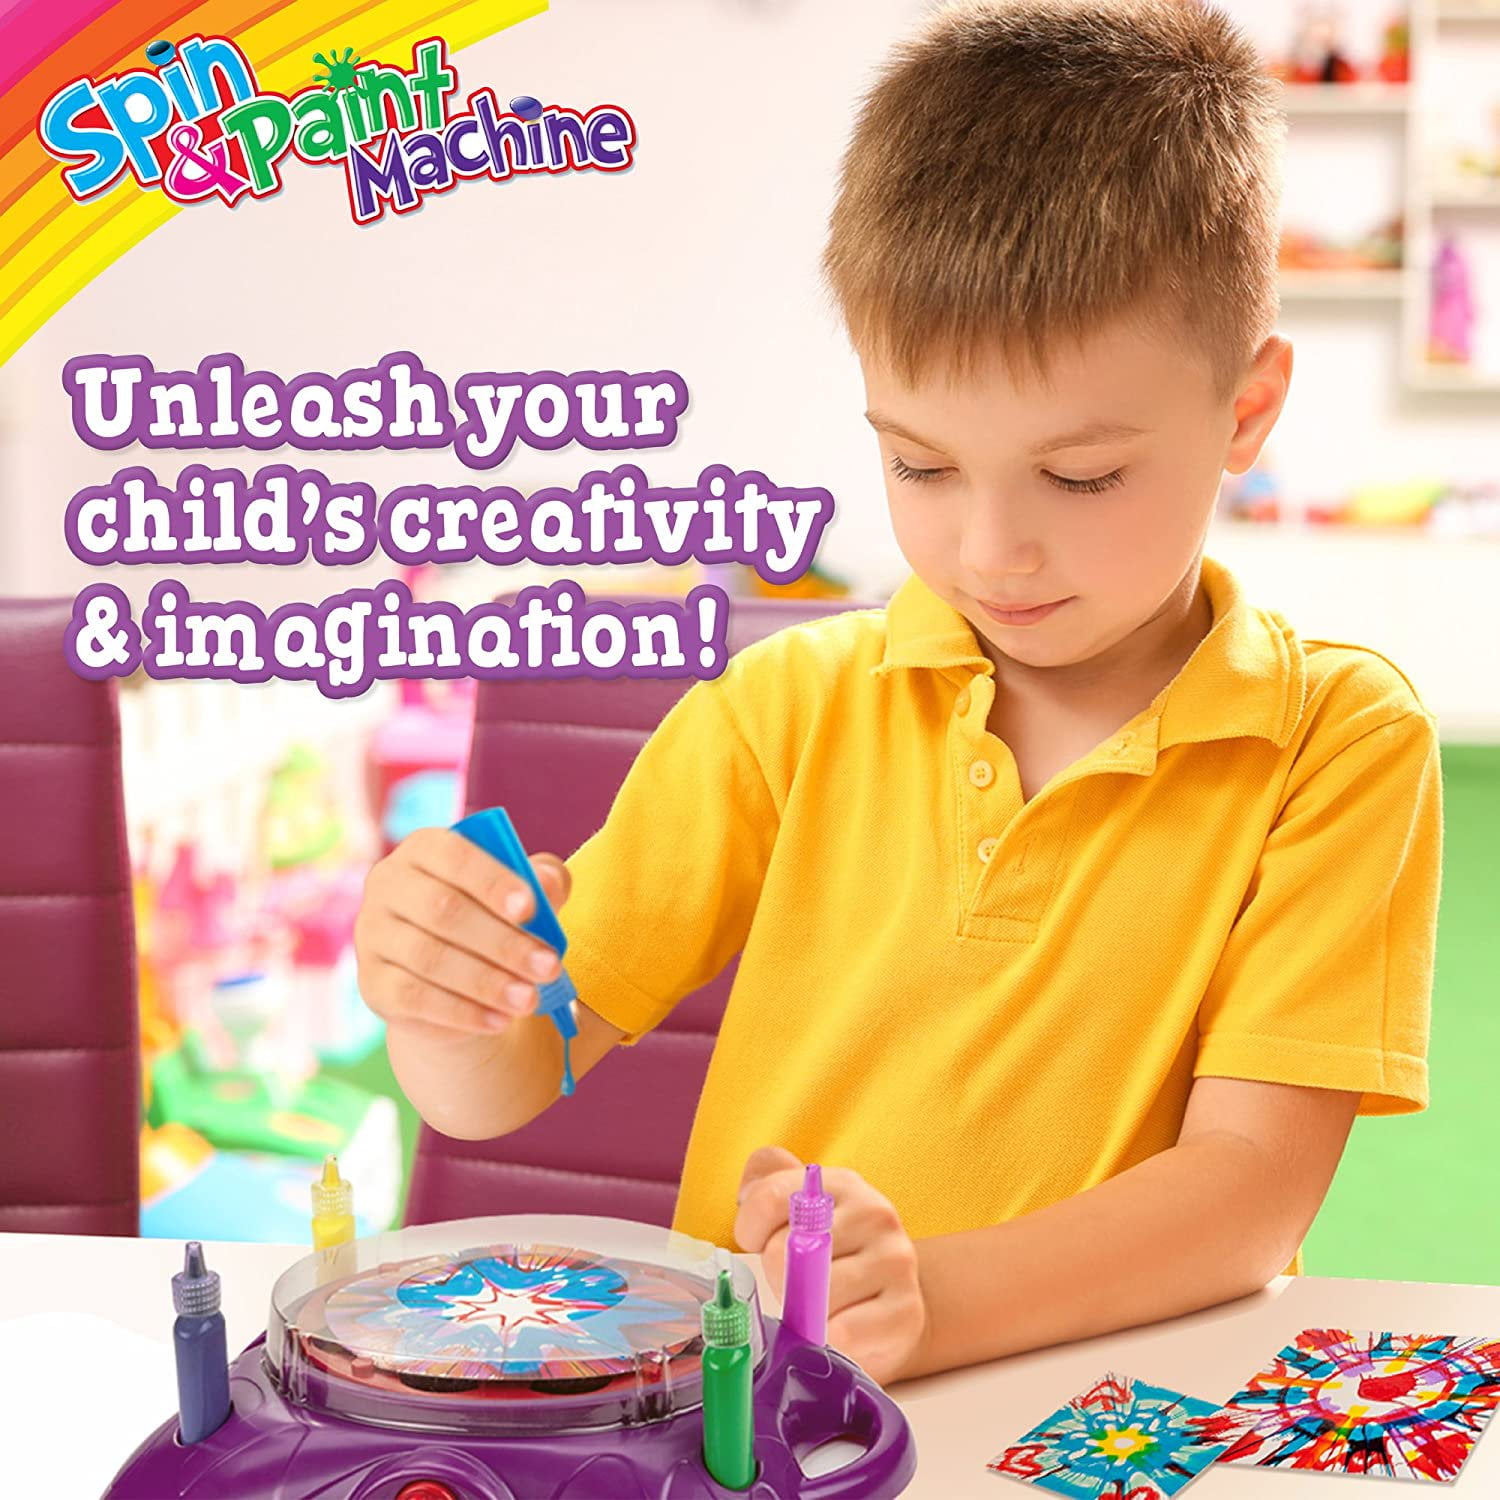 ArtCreativity Swirl Painting Kit for Kids, Friction Powered Spin Art M ·  Art Creativity